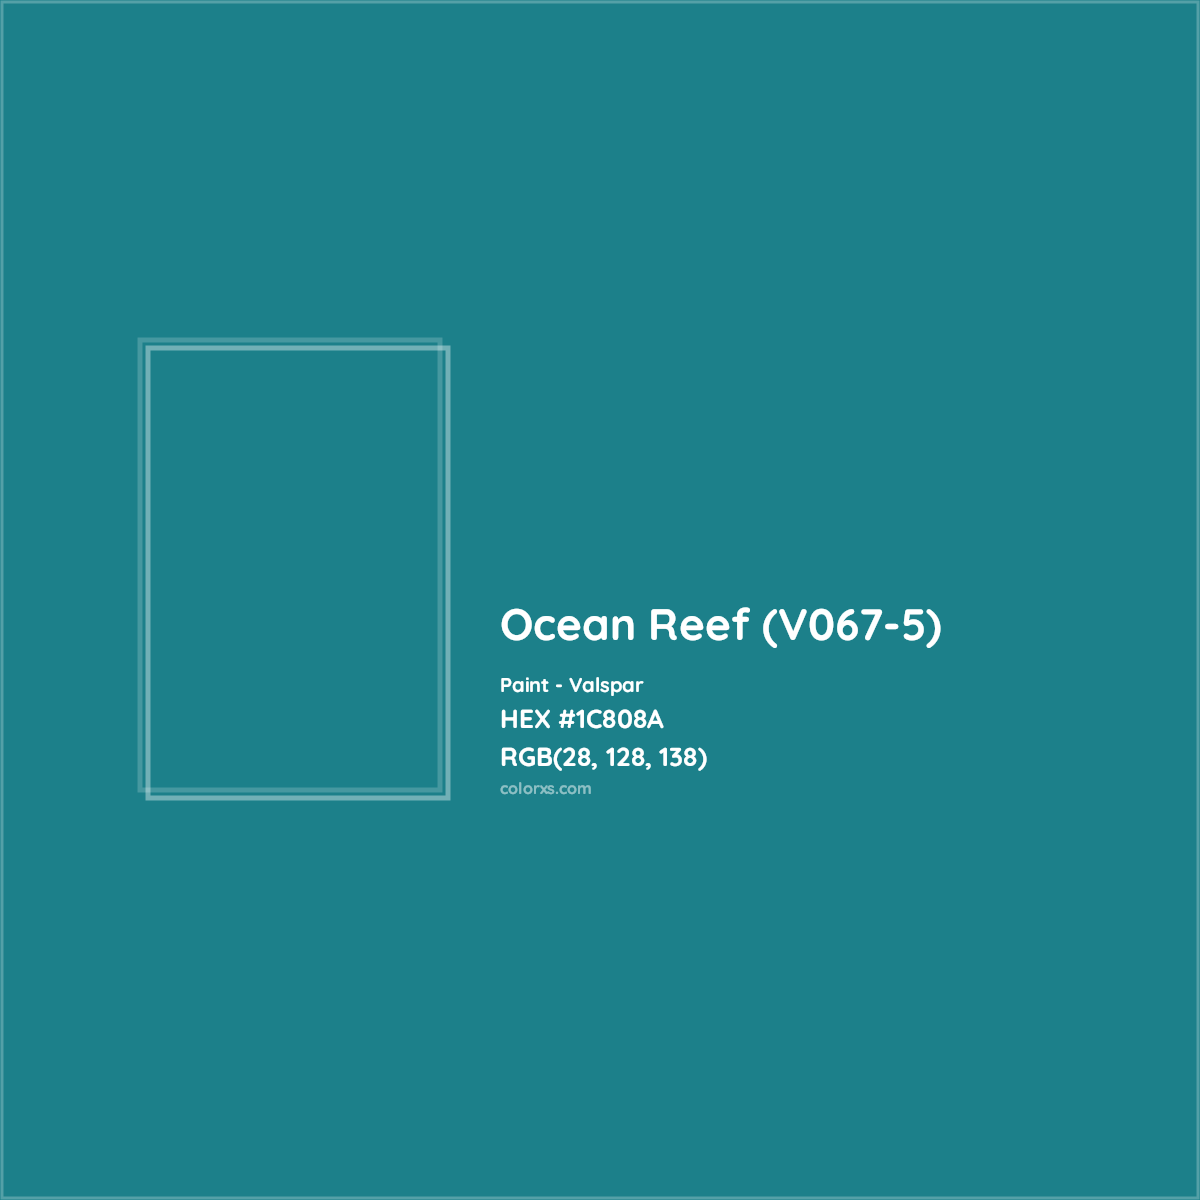 HEX #1C808A Ocean Reef (V067-5) Paint Valspar - Color Code